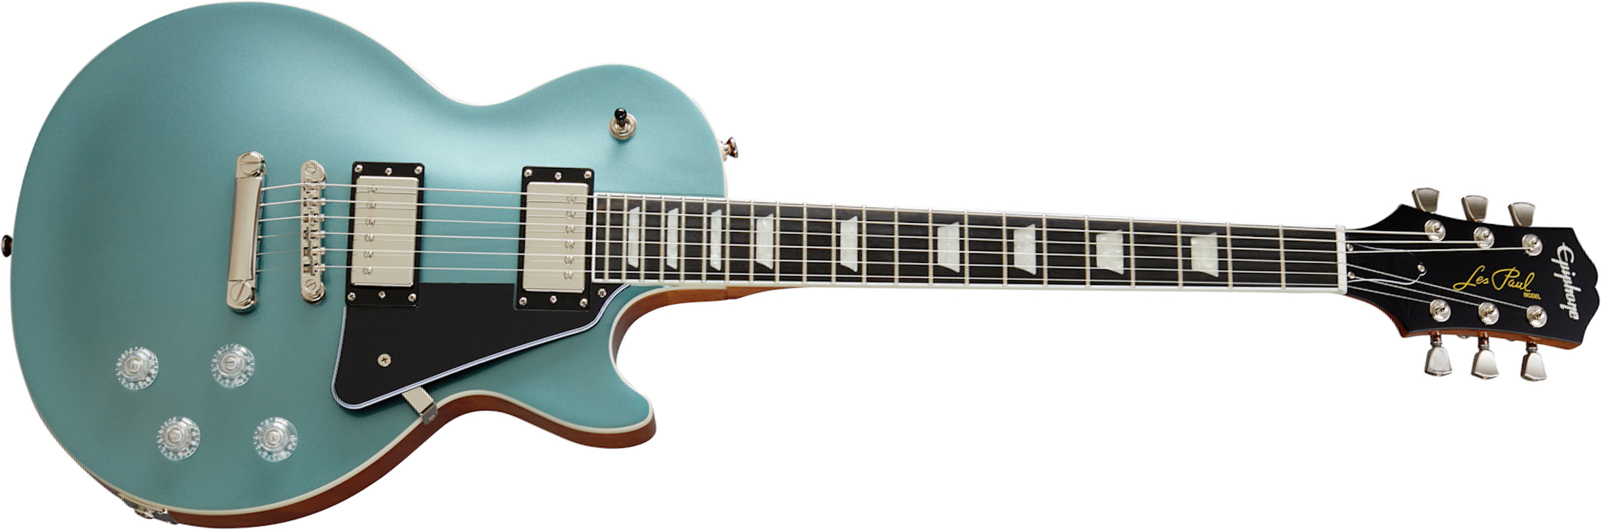 Epiphone Les Paul Modern 2h Ht Eb - Faded Pelham Blue - Single cut electric guitar - Main picture